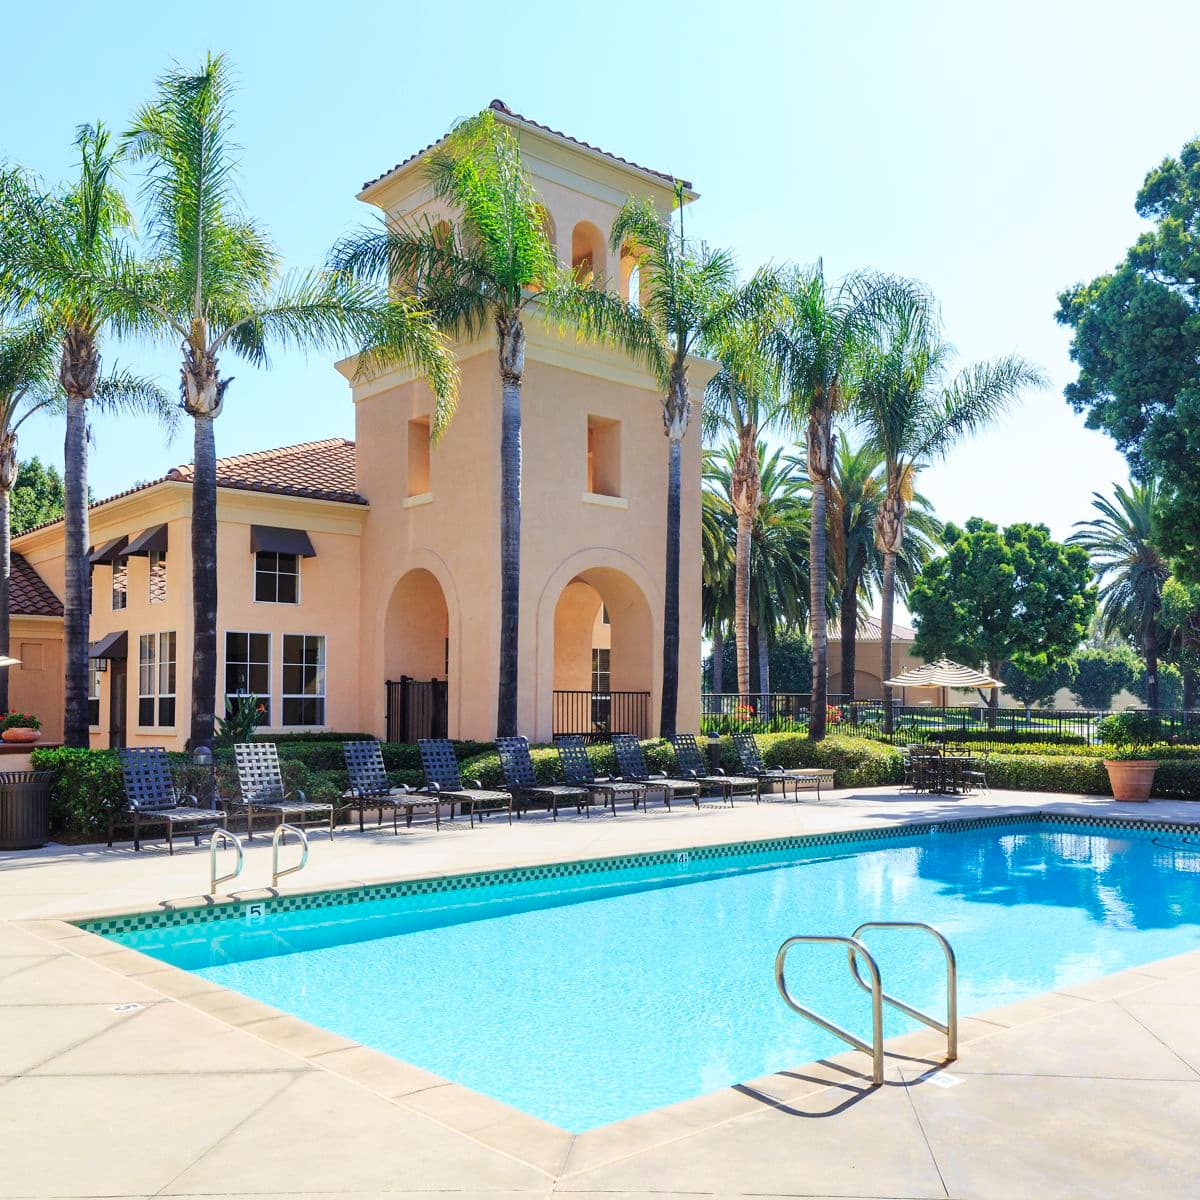 Villa Coronado Apartments in Irvine